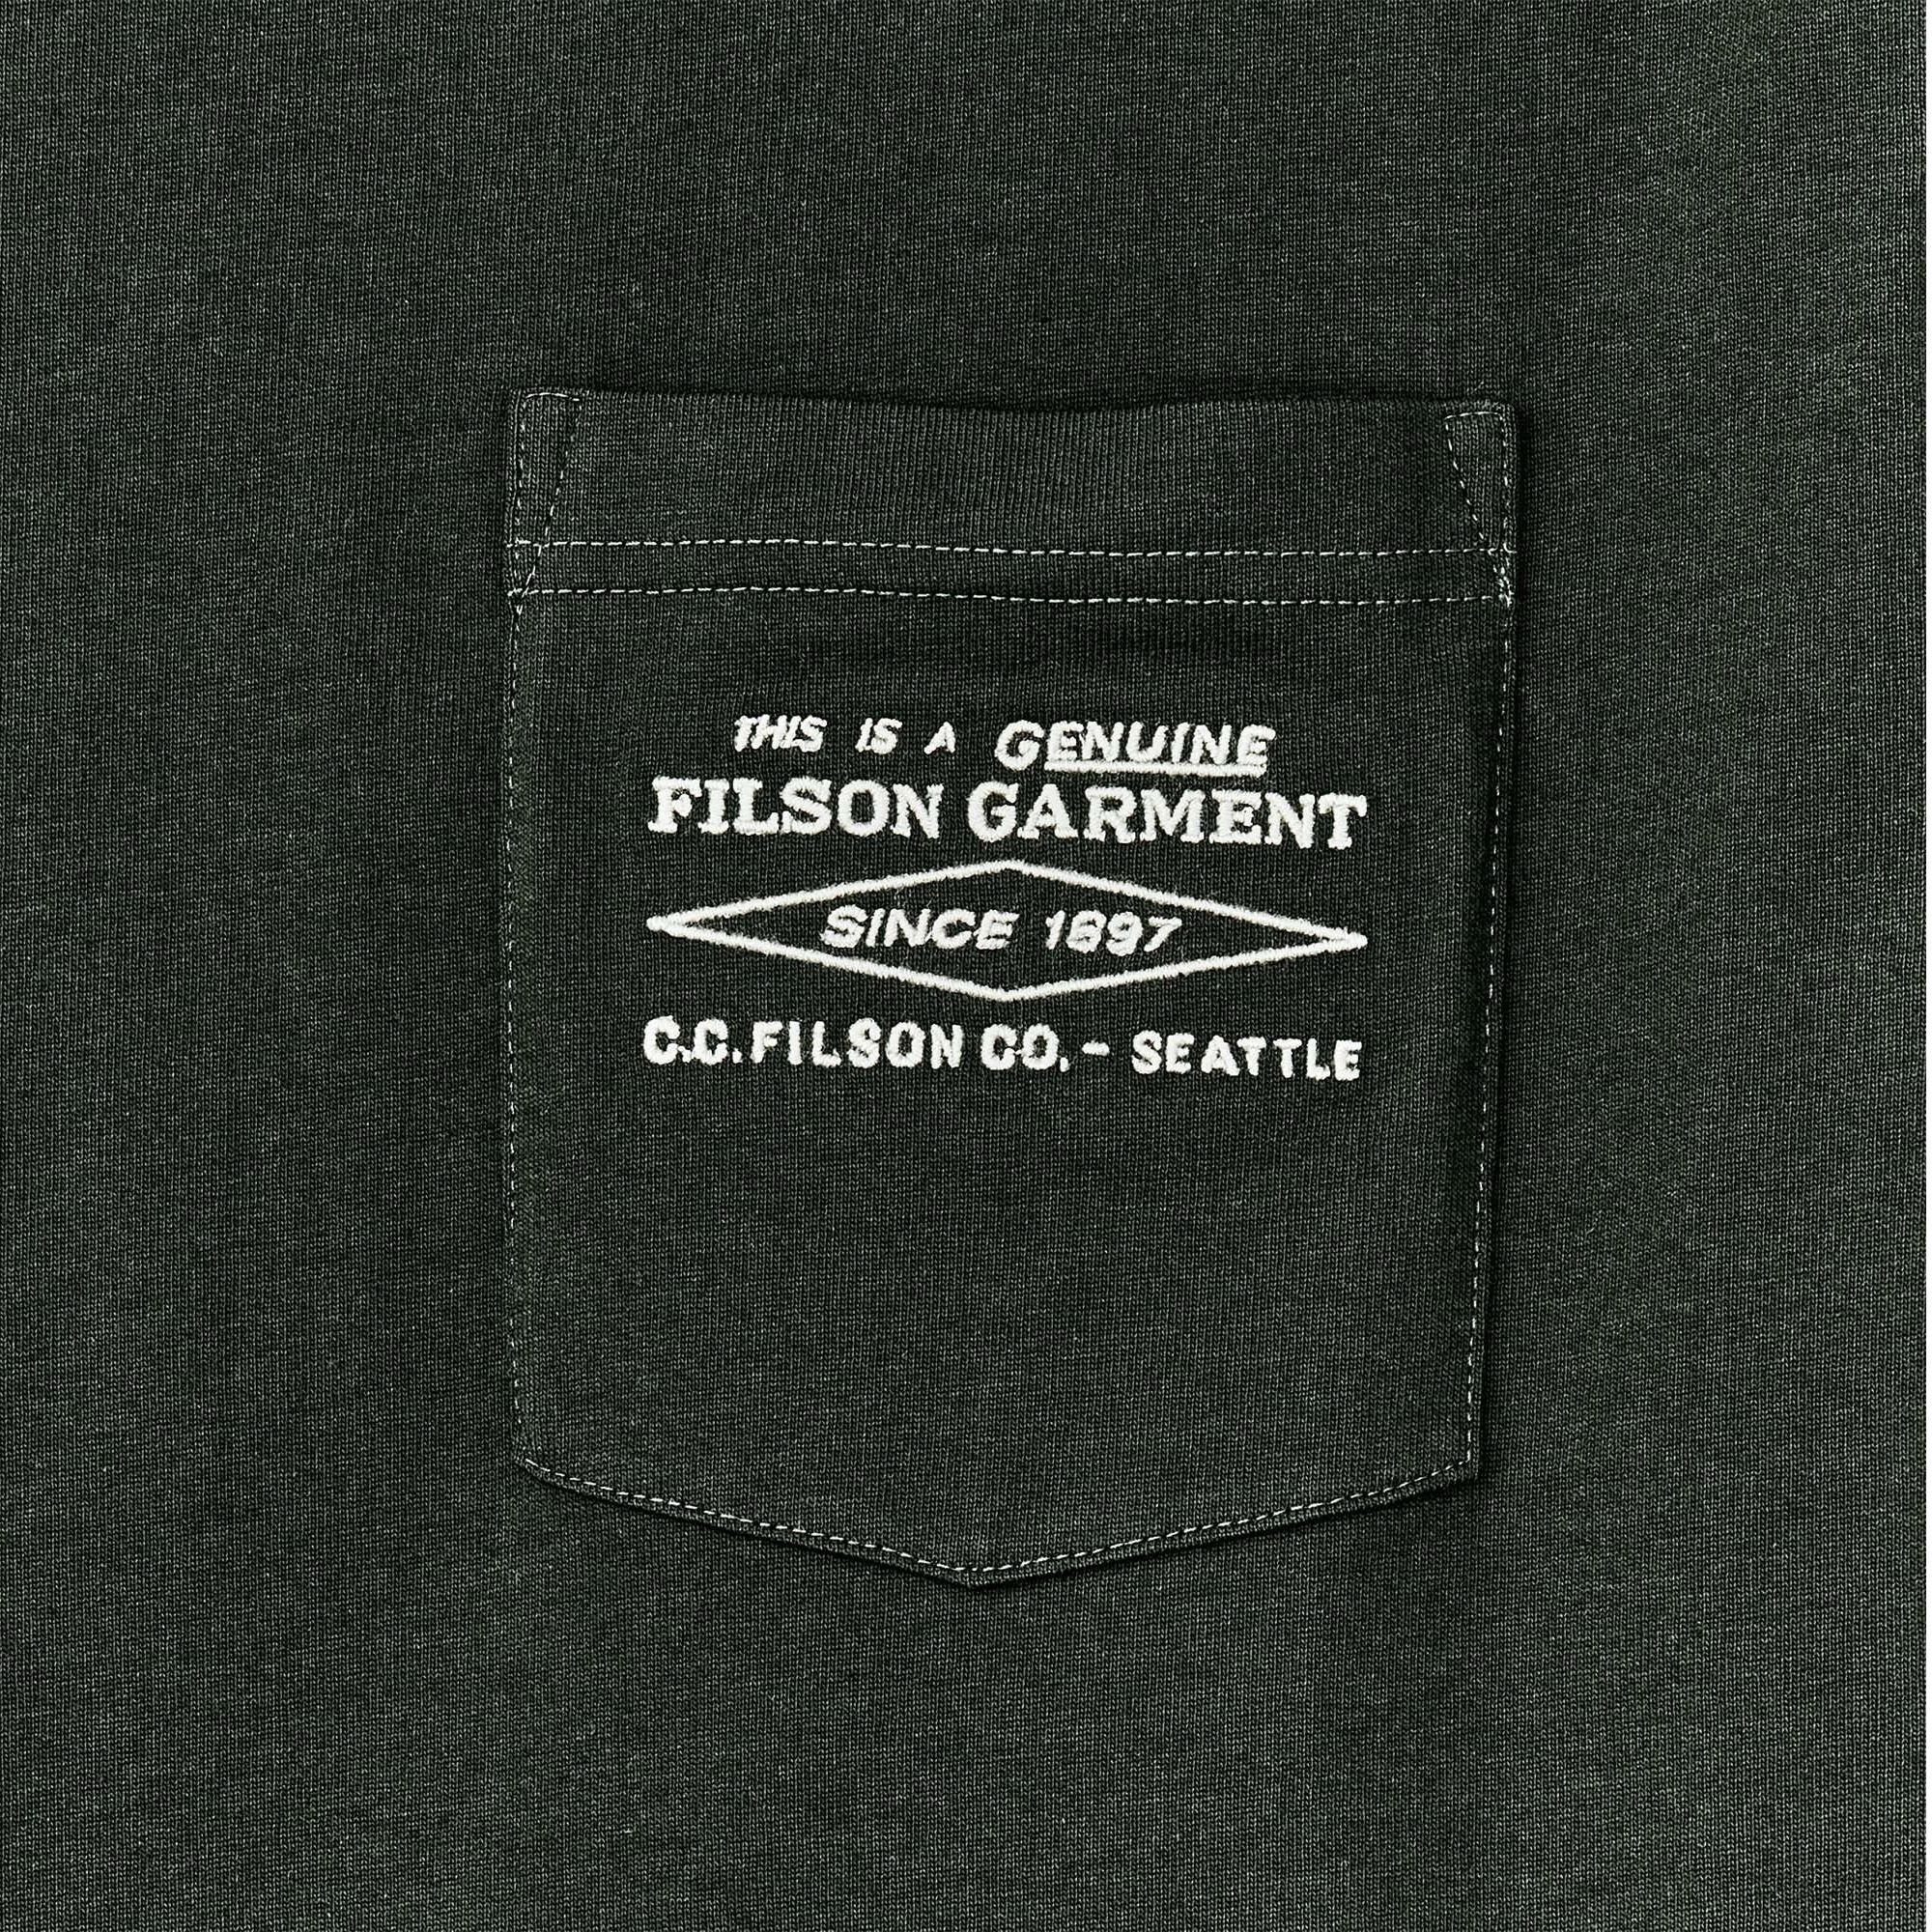 Men's Embroidered Pocket T-shirt Dark Timber Diamond 